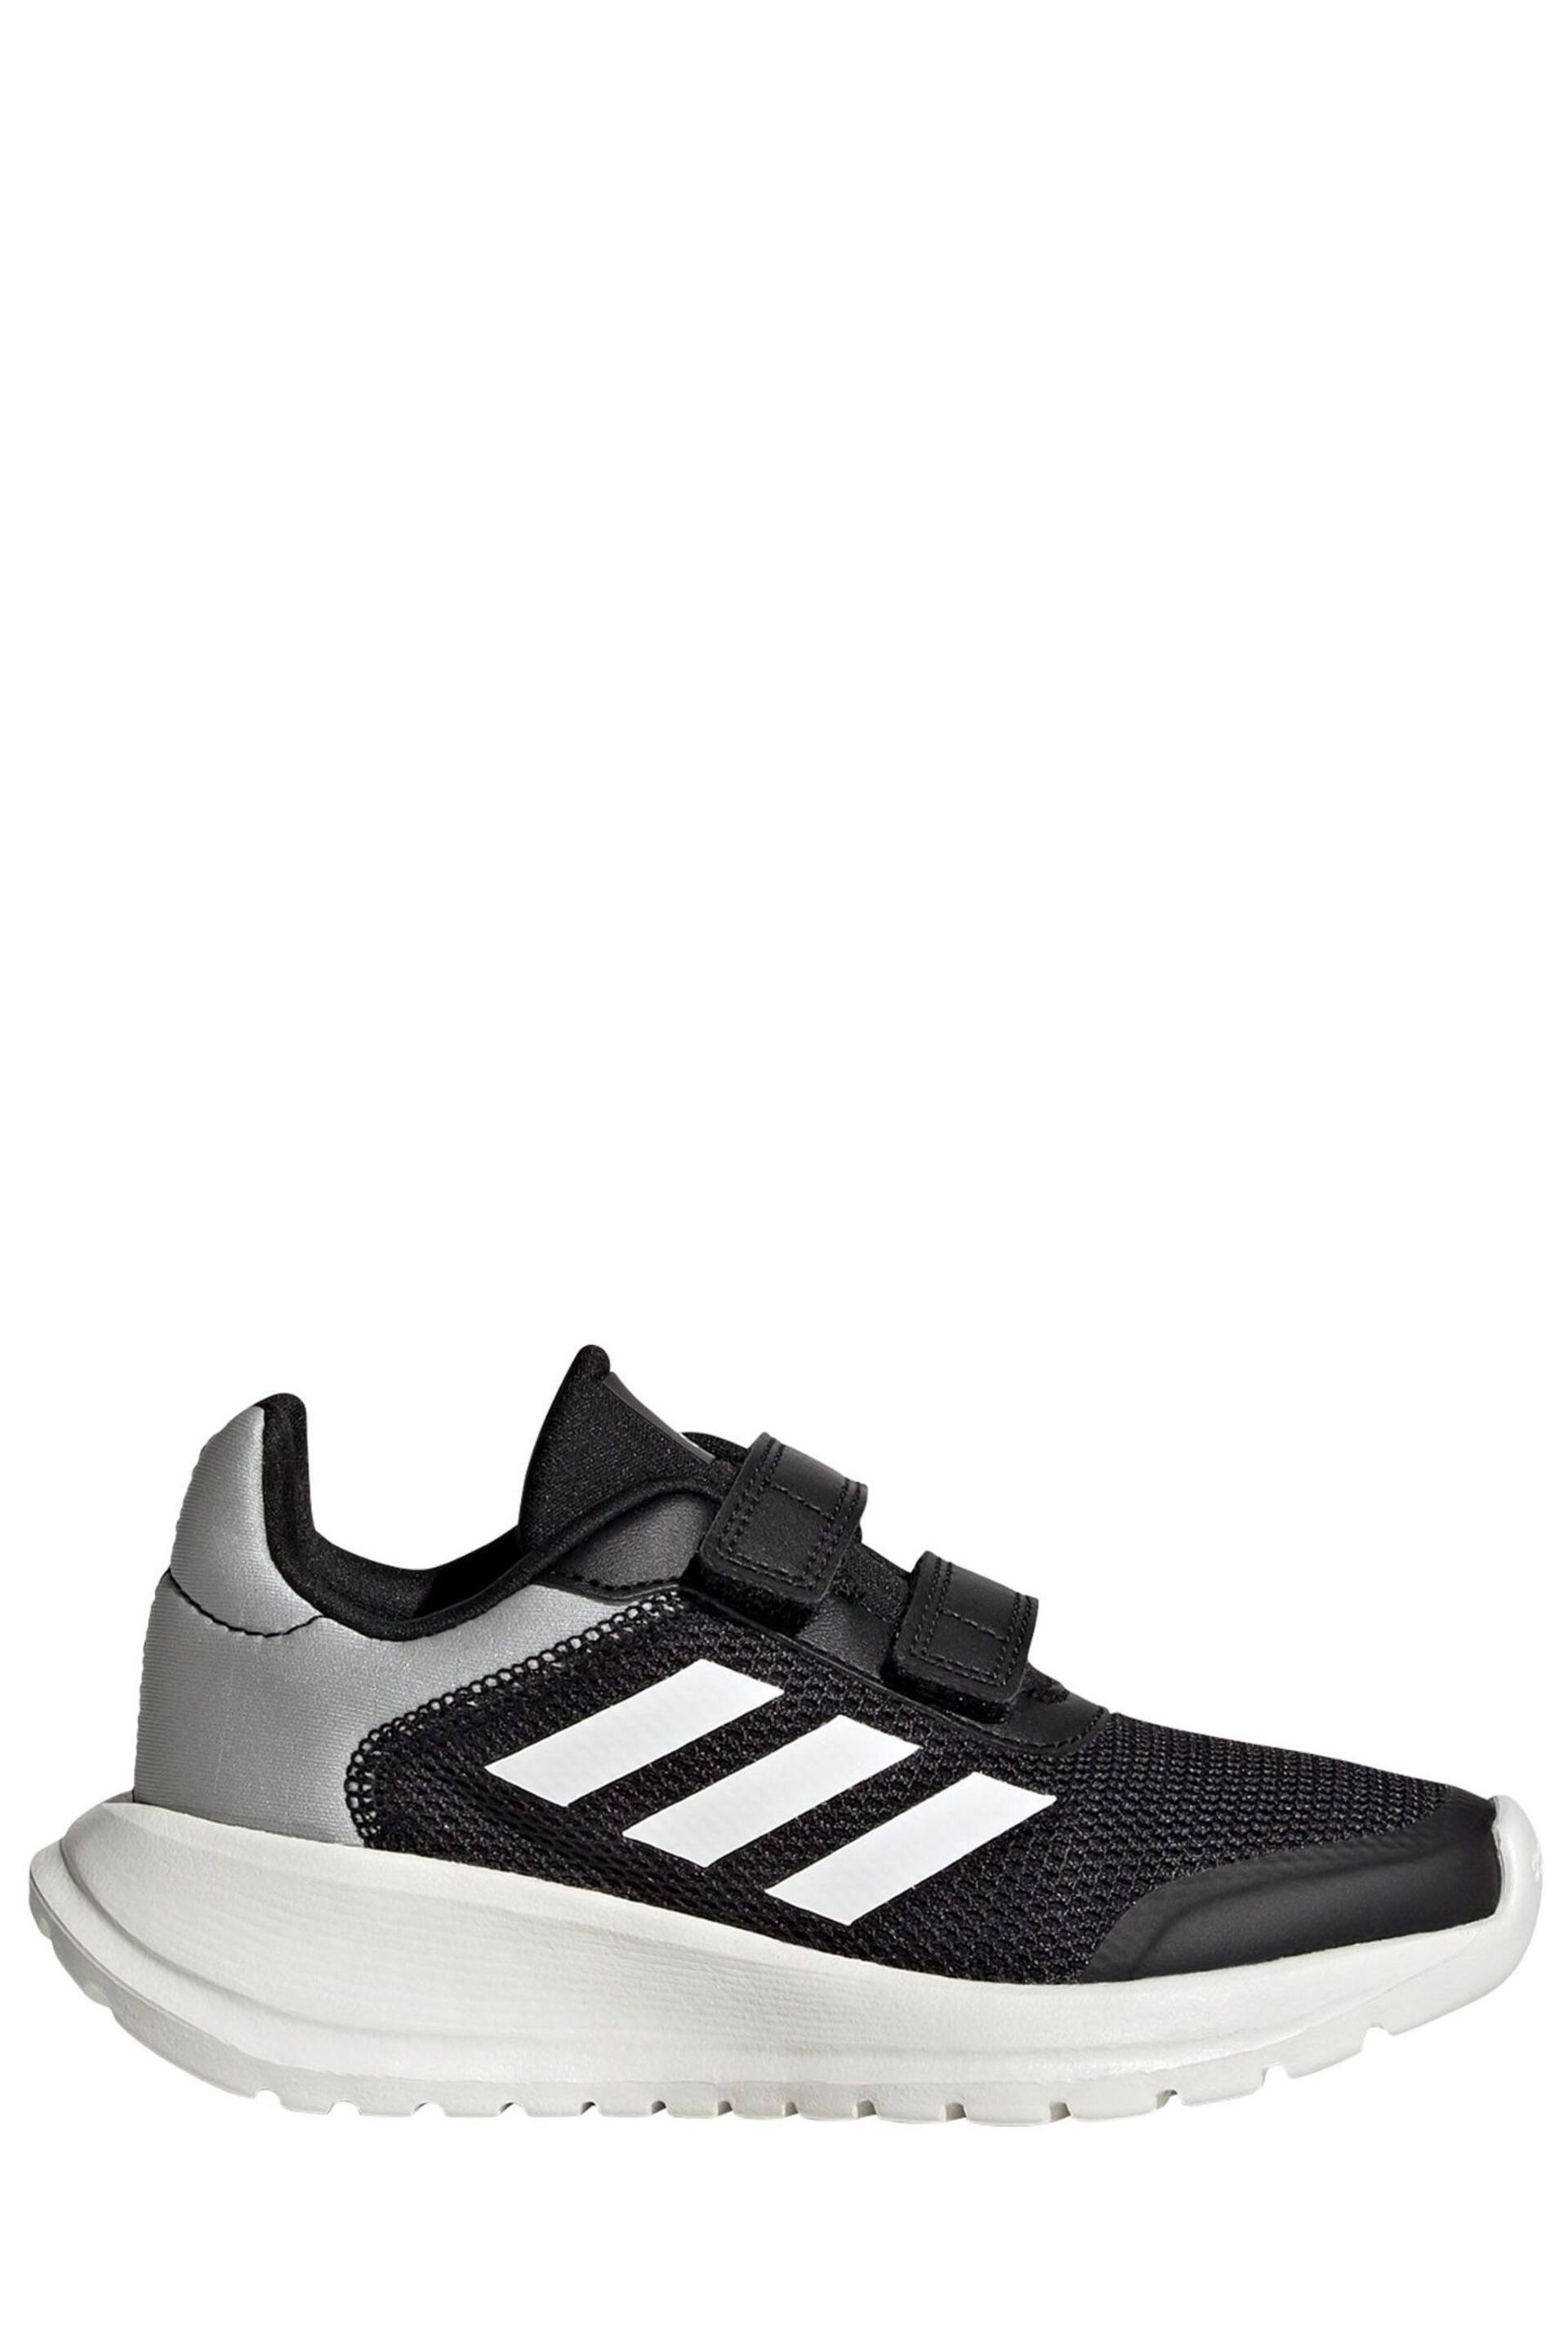 adidas Black/white Kids Sportswear Tensaur Run Trainers - Image 4 of 12